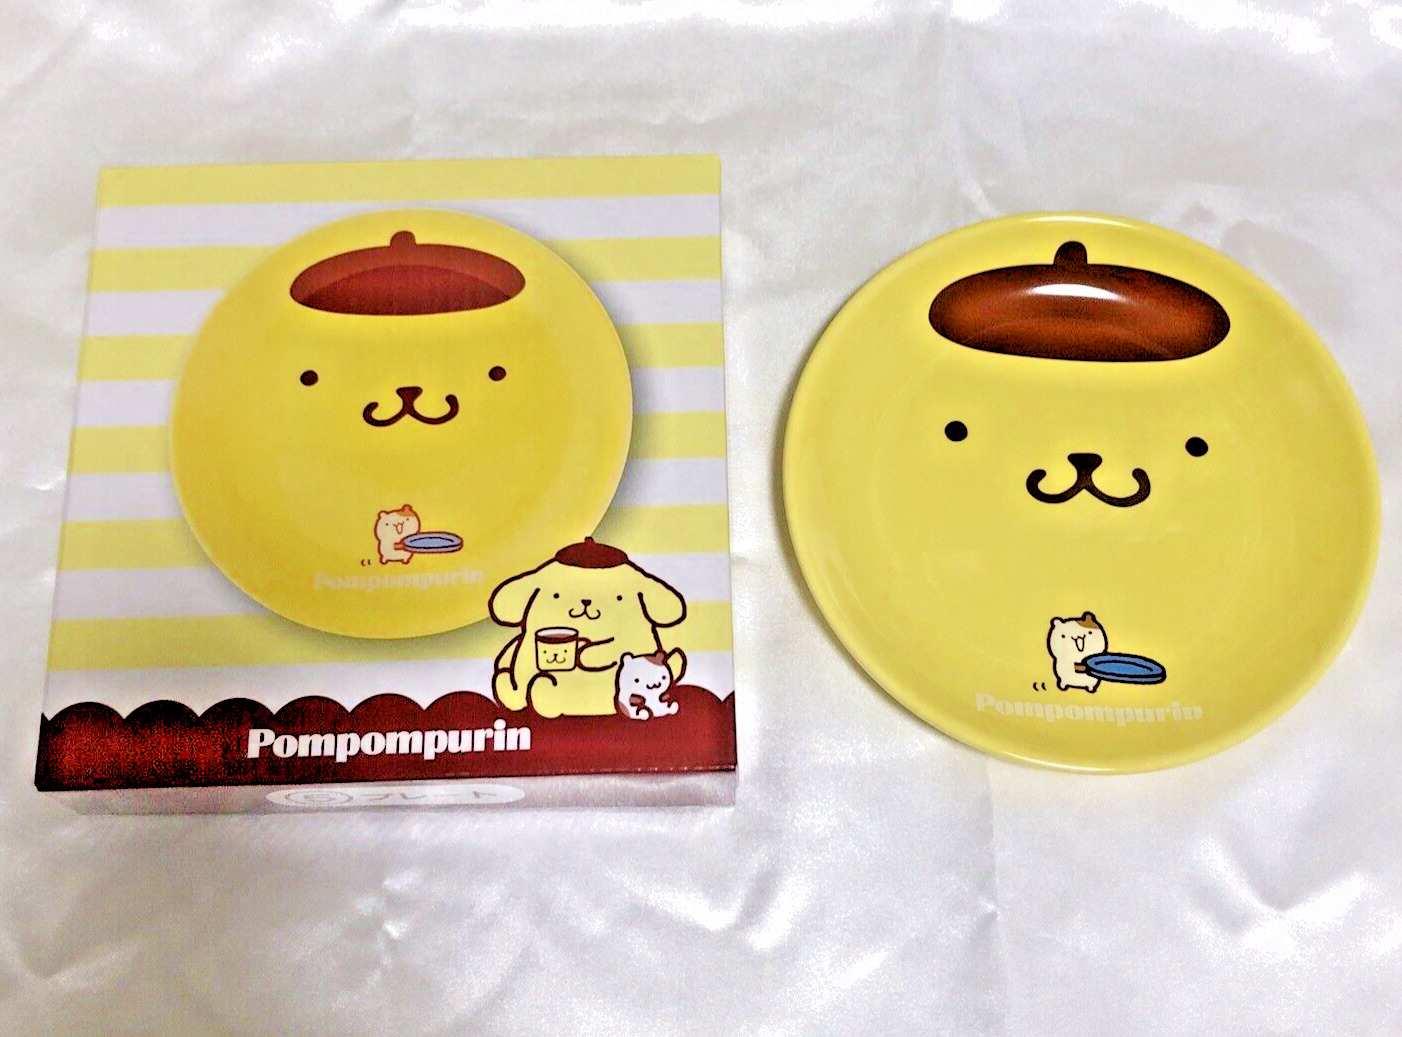 Sanrio Pompompurin Ceramic Dish Plates Ichiban atari Kuji Japan Limited  2 sets